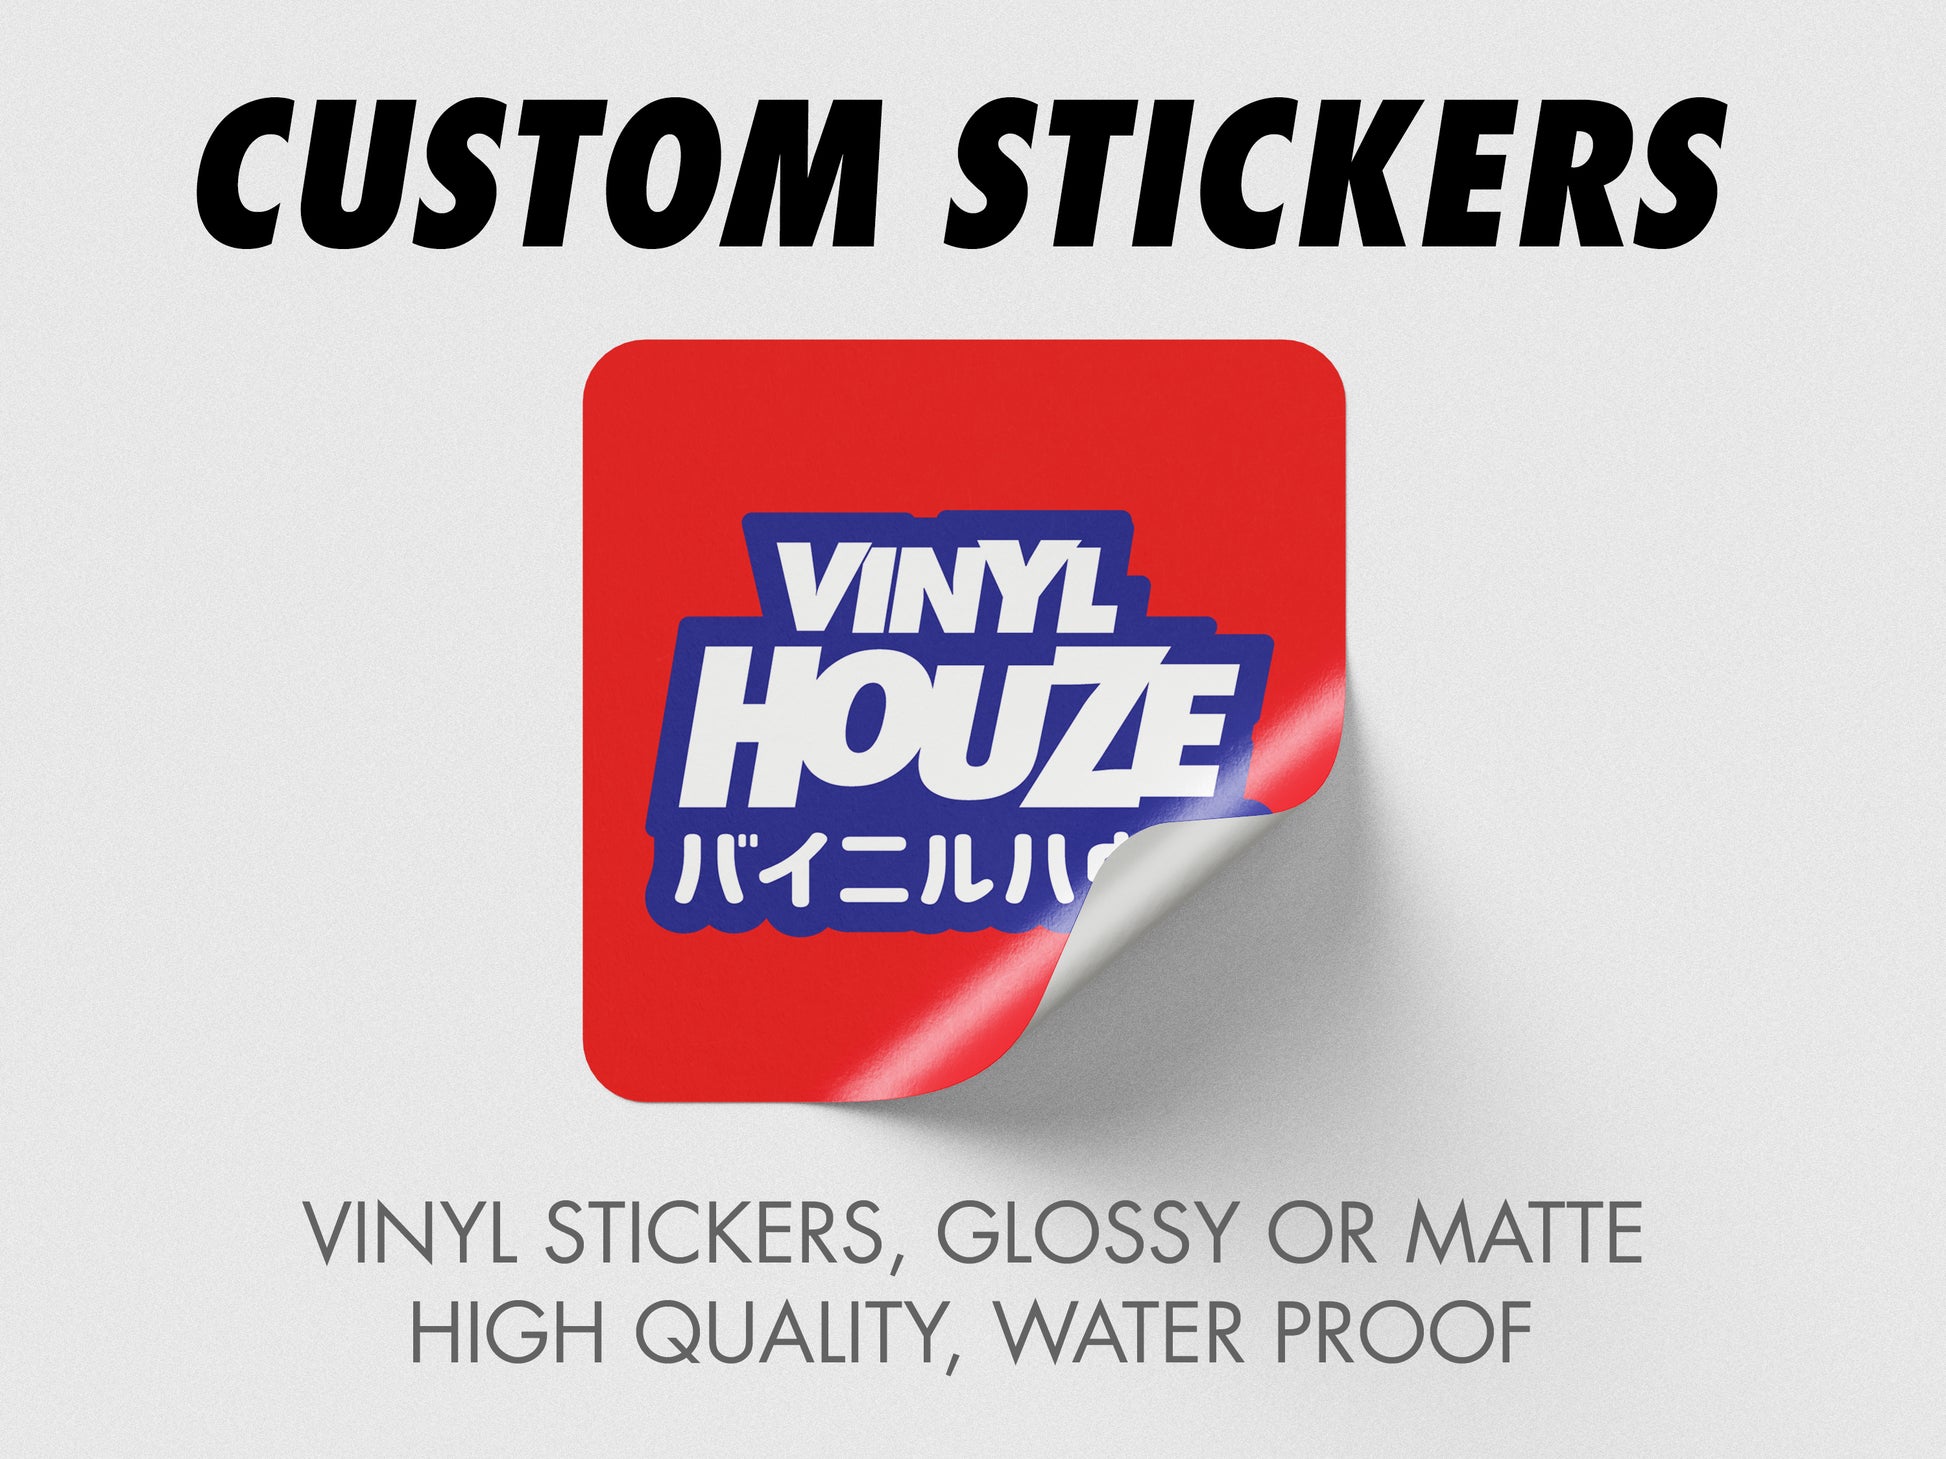 10 Personalized Square Stickers - VINYL HOUZE